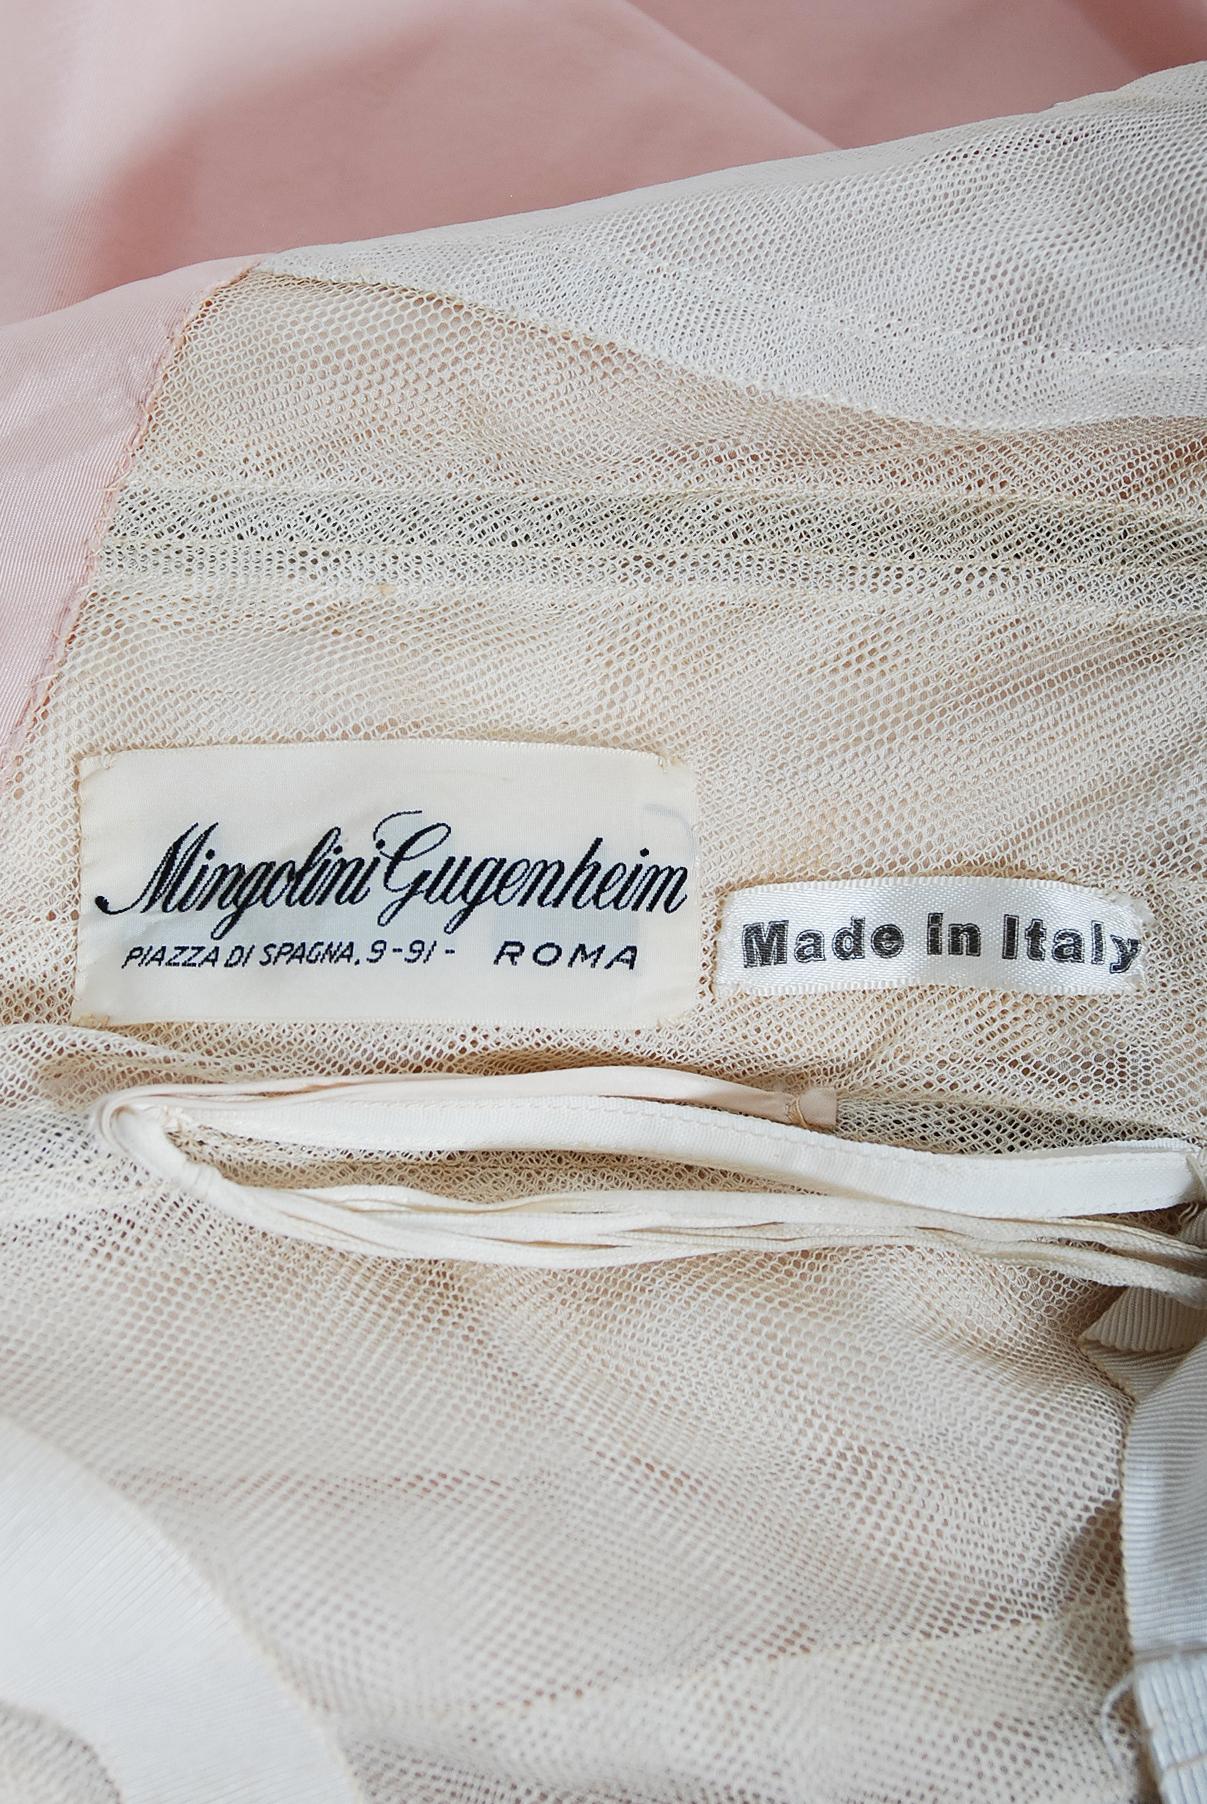 Vintage 1950's Mingolini Guggenheim Couture Rosa plissiert Seide trägerlos Kleid 4